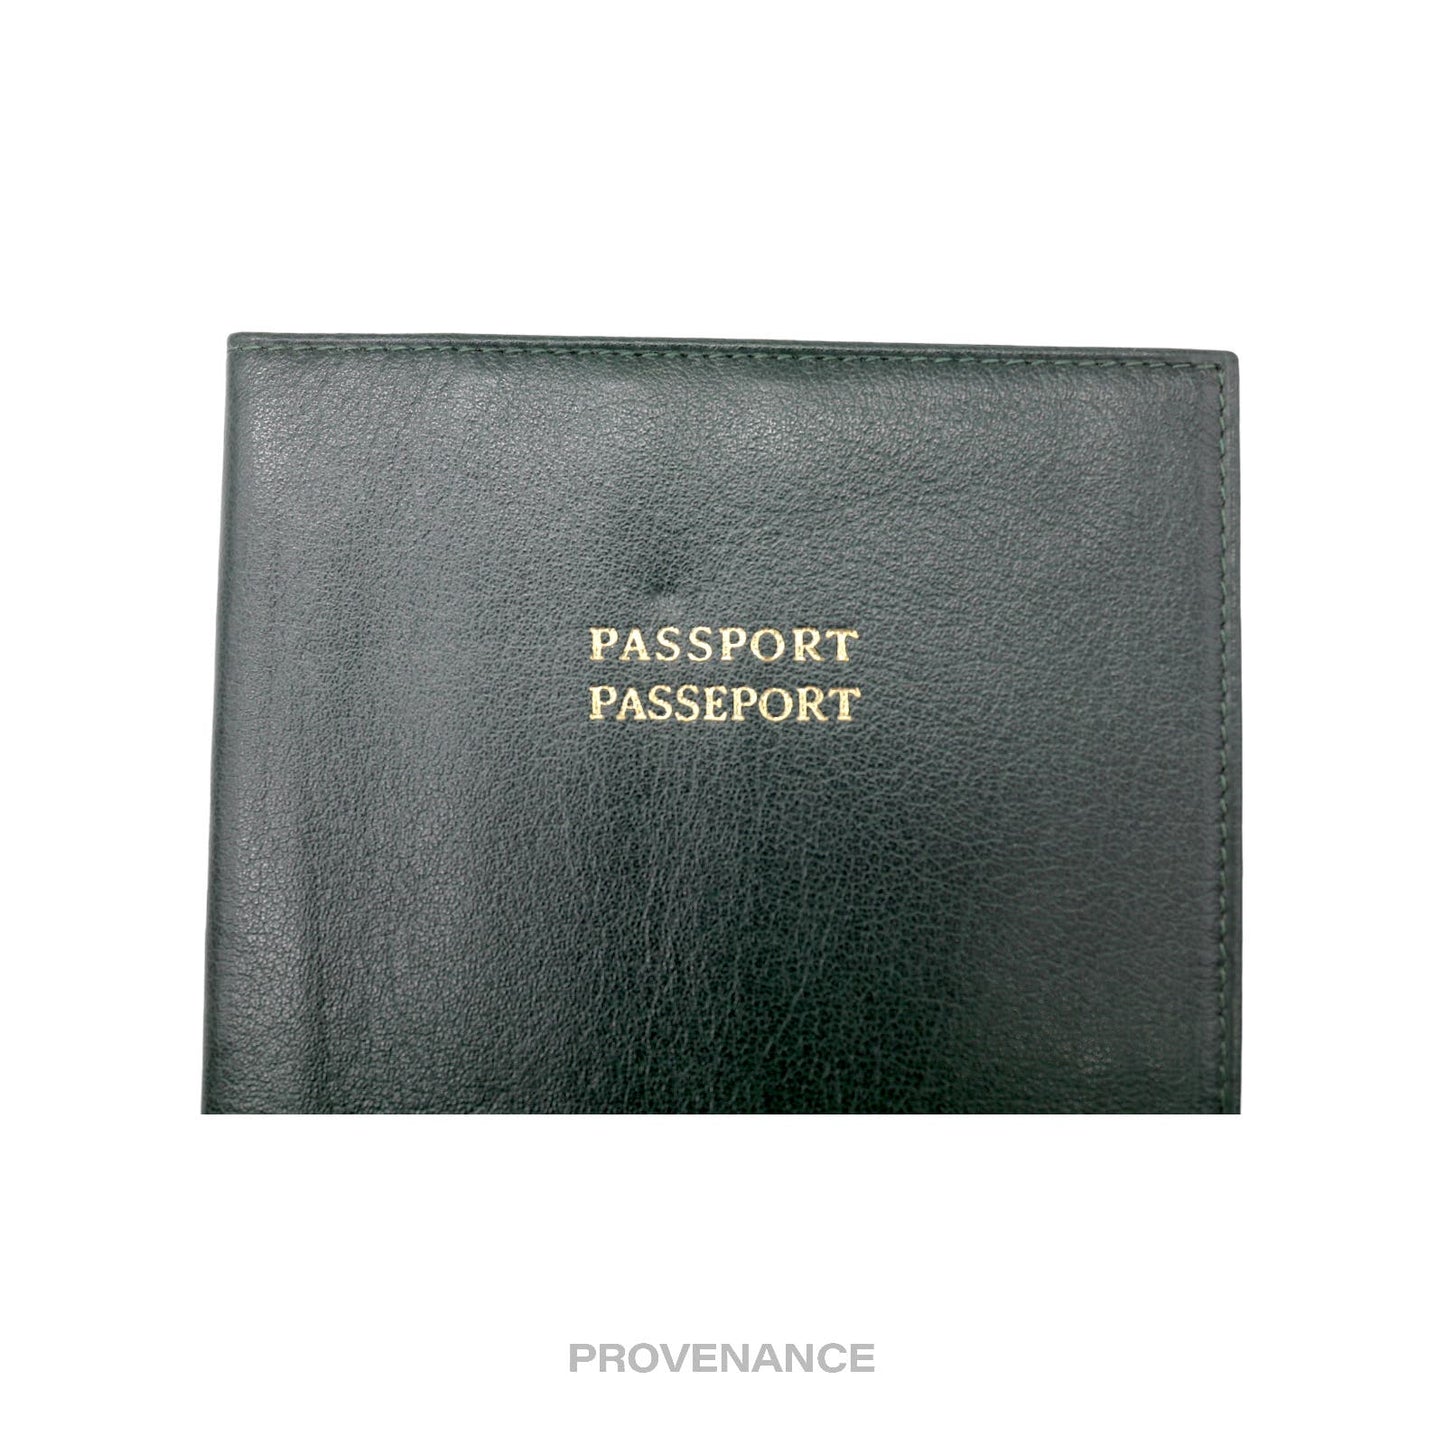 🔴 Rolex Passport Wallet - Forest Green Leather